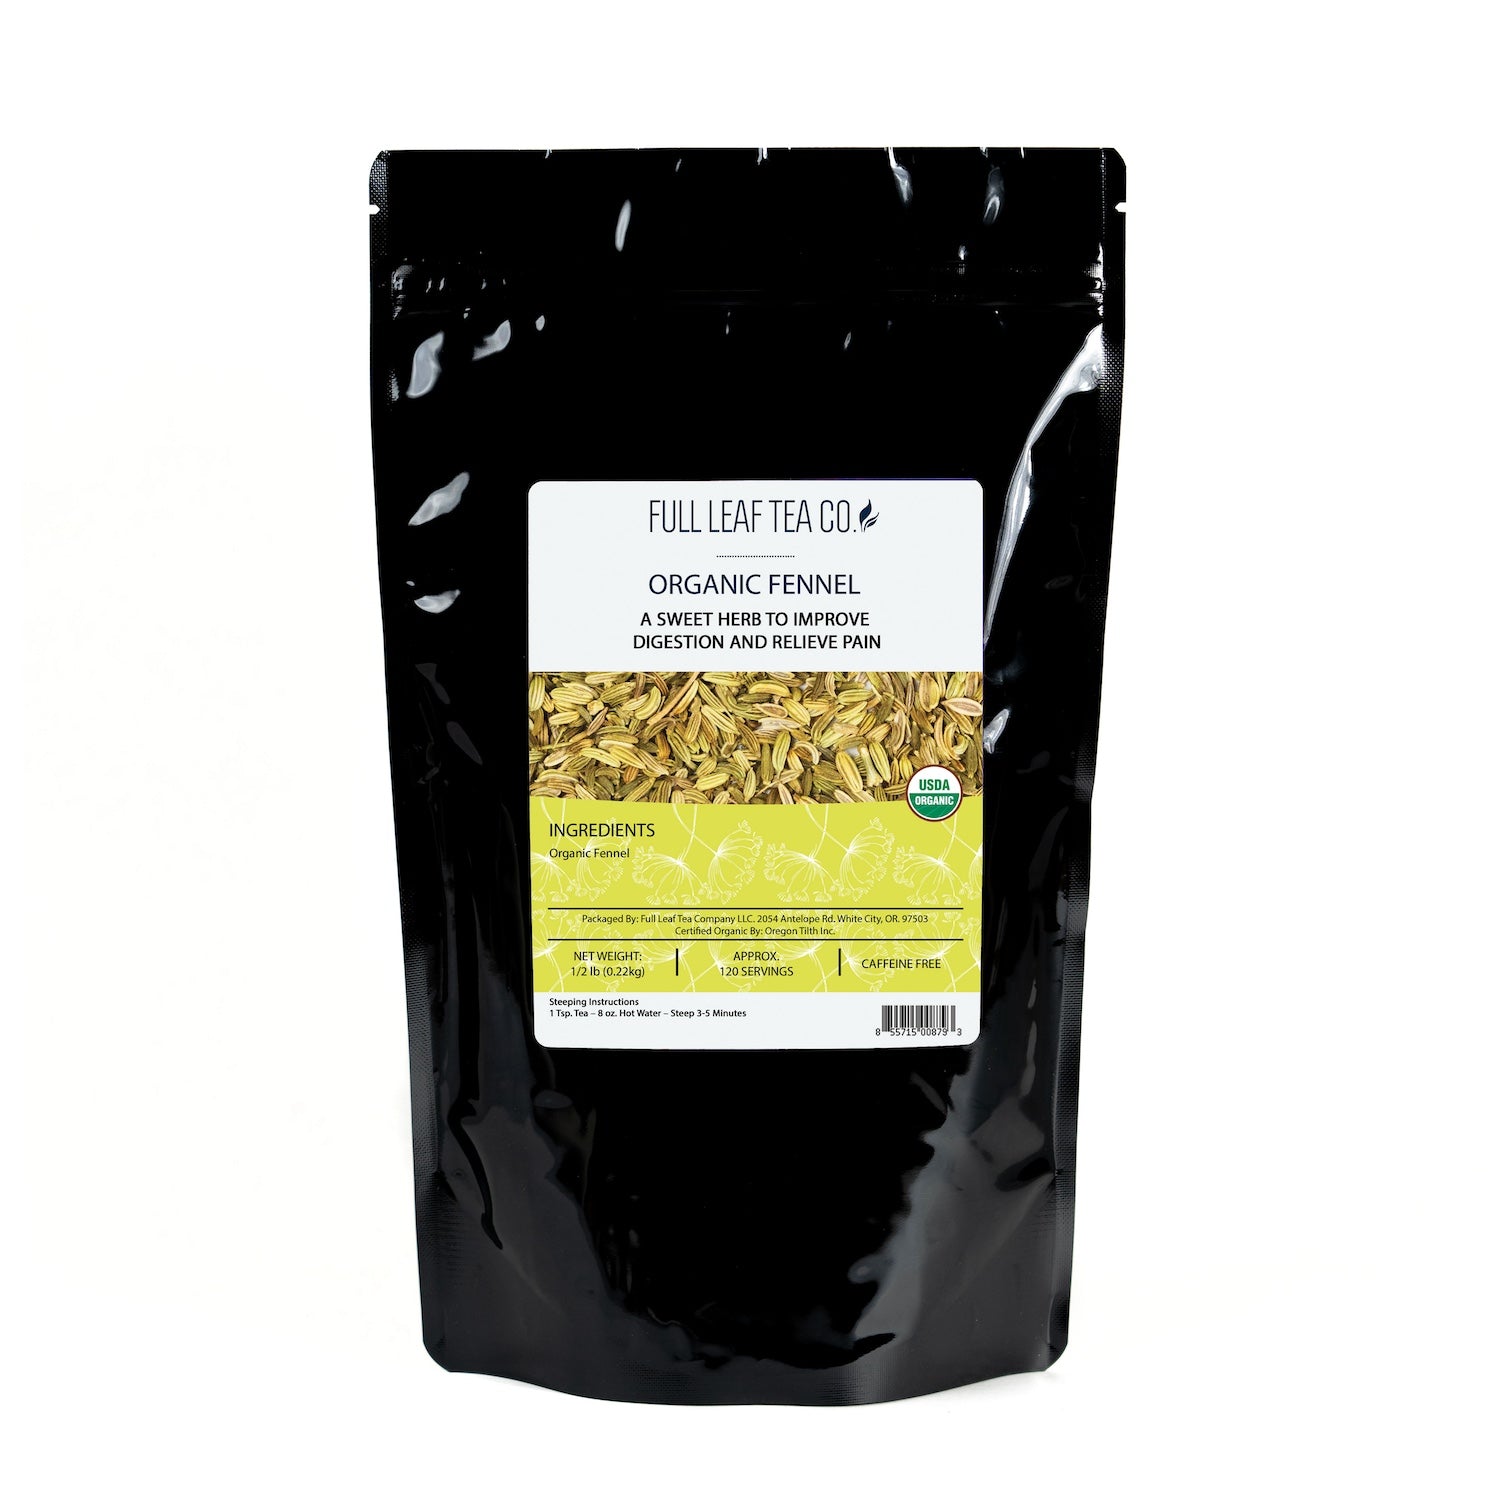 Organic Fennel - Loose Leaf Tea - Full Leaf Tea Company